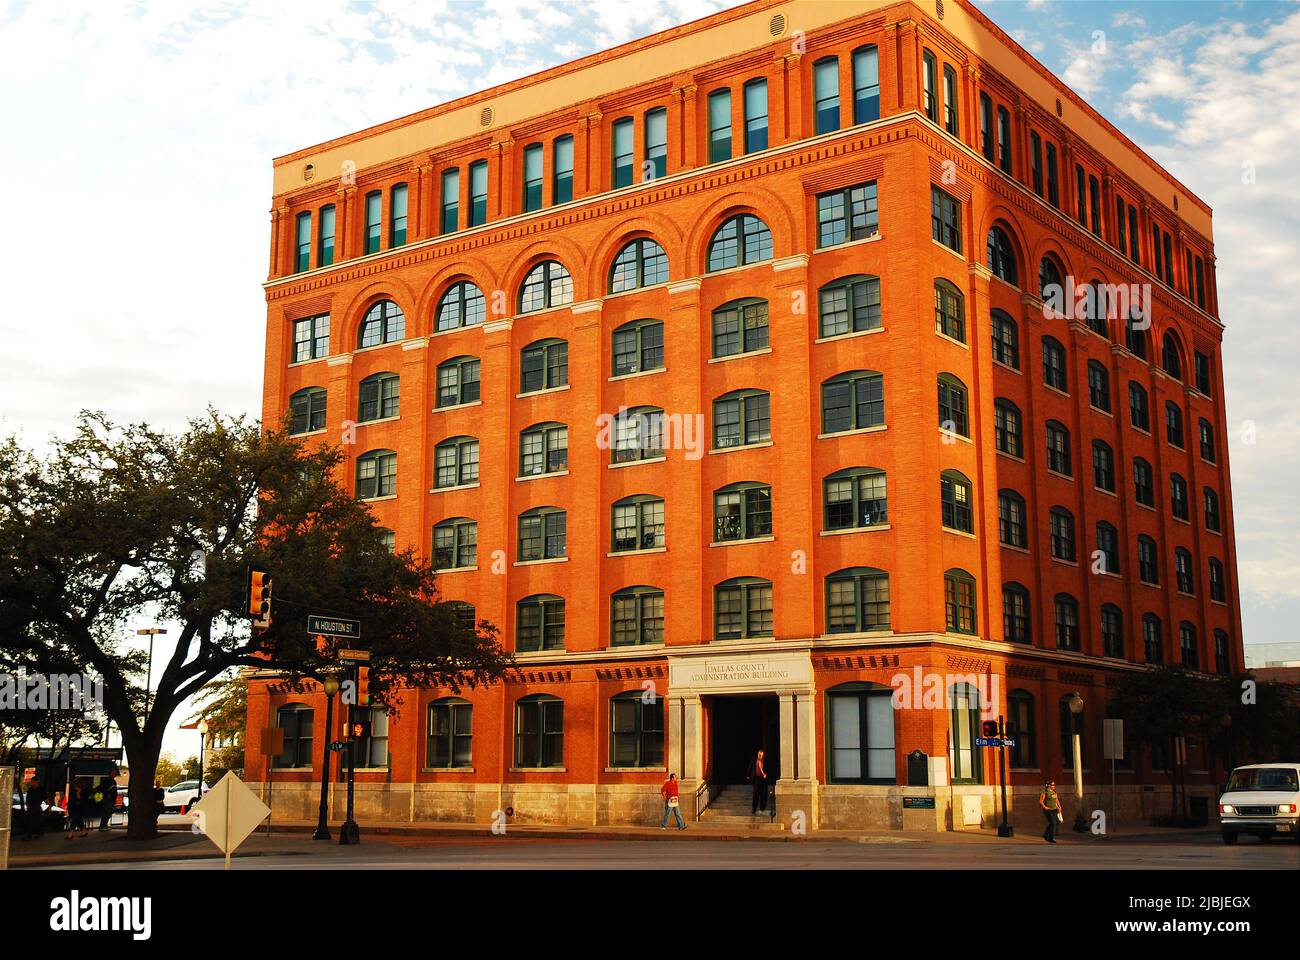 Das Book Depository Building in Dallas ist der Drehort, als Lee Harvey Oswald den Präsidenten John F. Kennedy ermordete Stockfoto